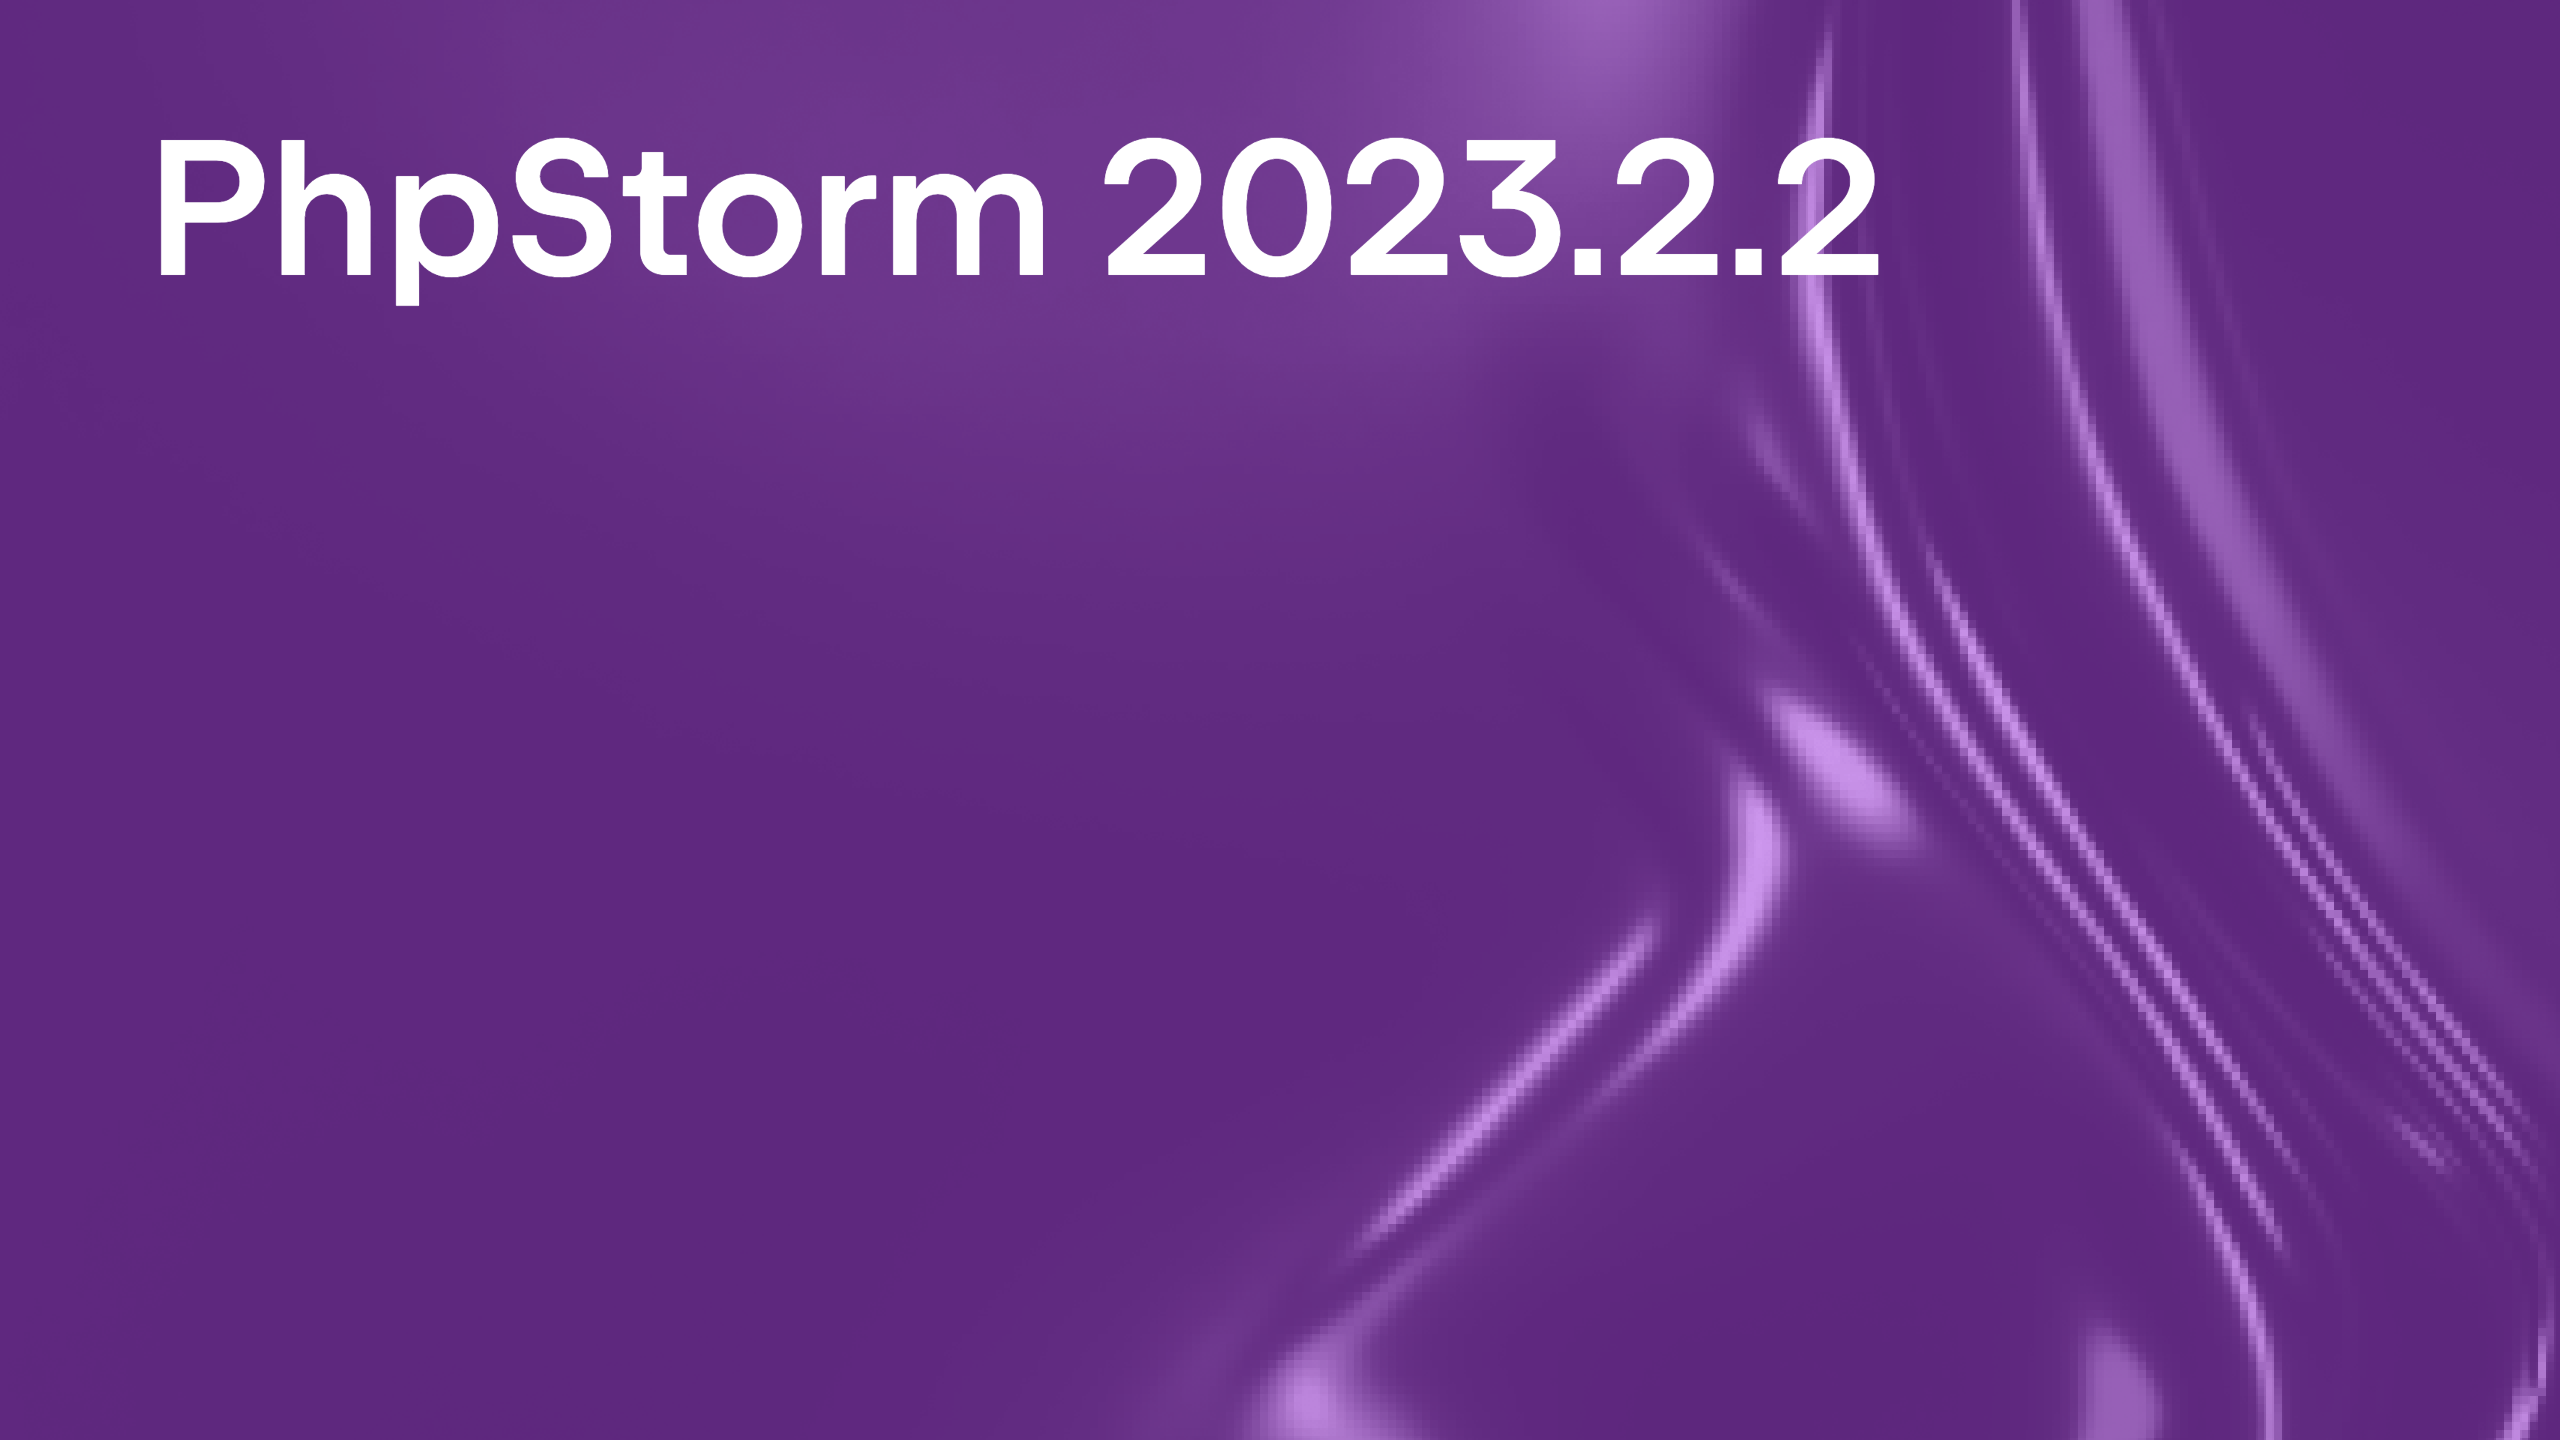 PhpStorm 2023.2.2